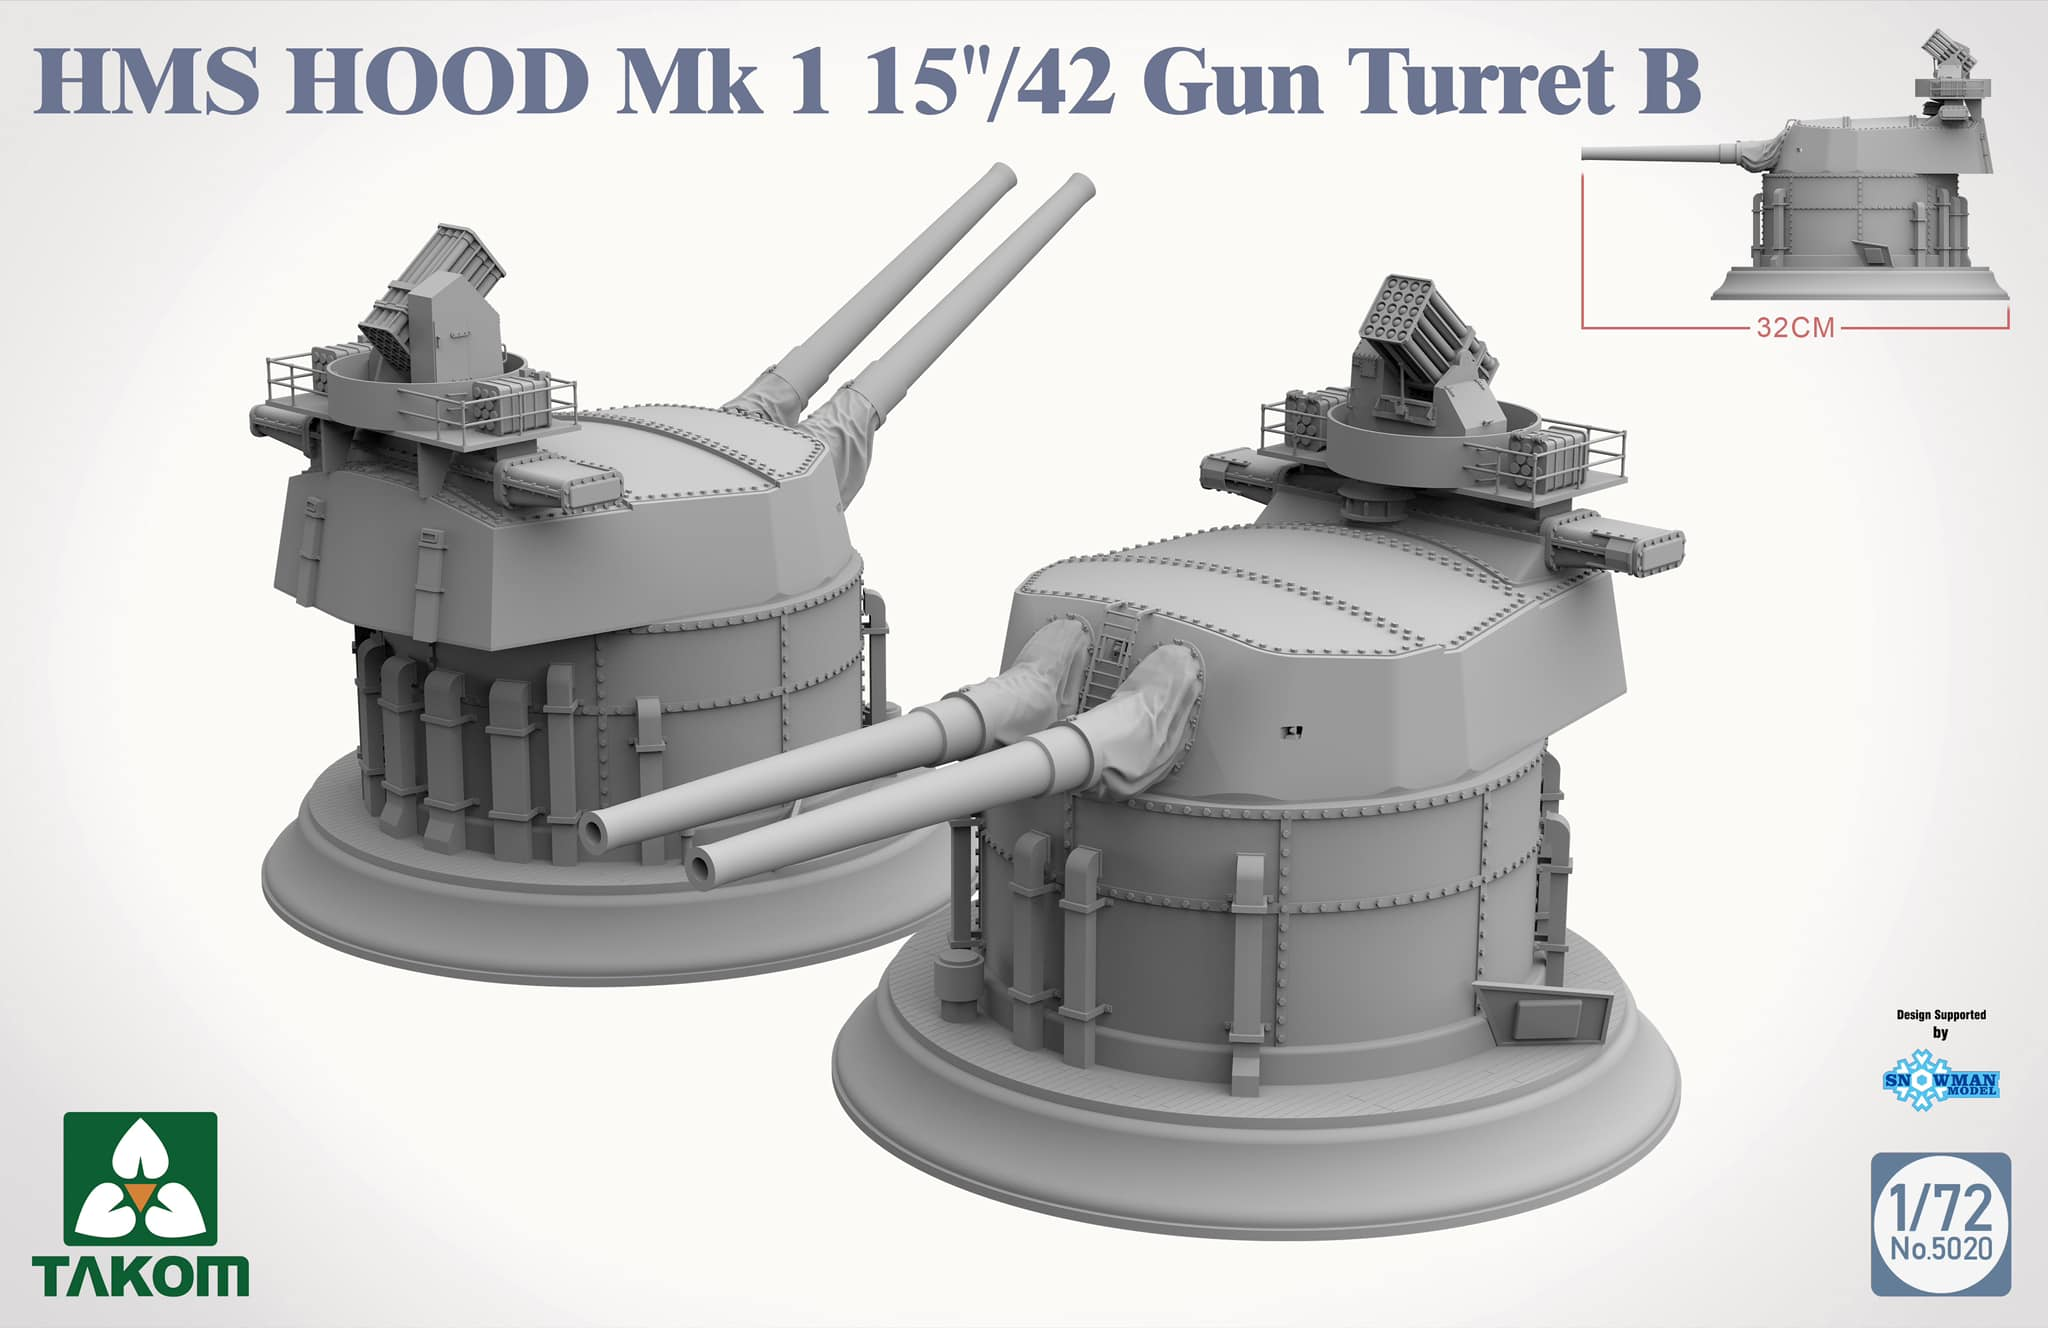 TAKOM 1/72 HMS HOOD MK 1 15/42 GUN TURRET B 5020 